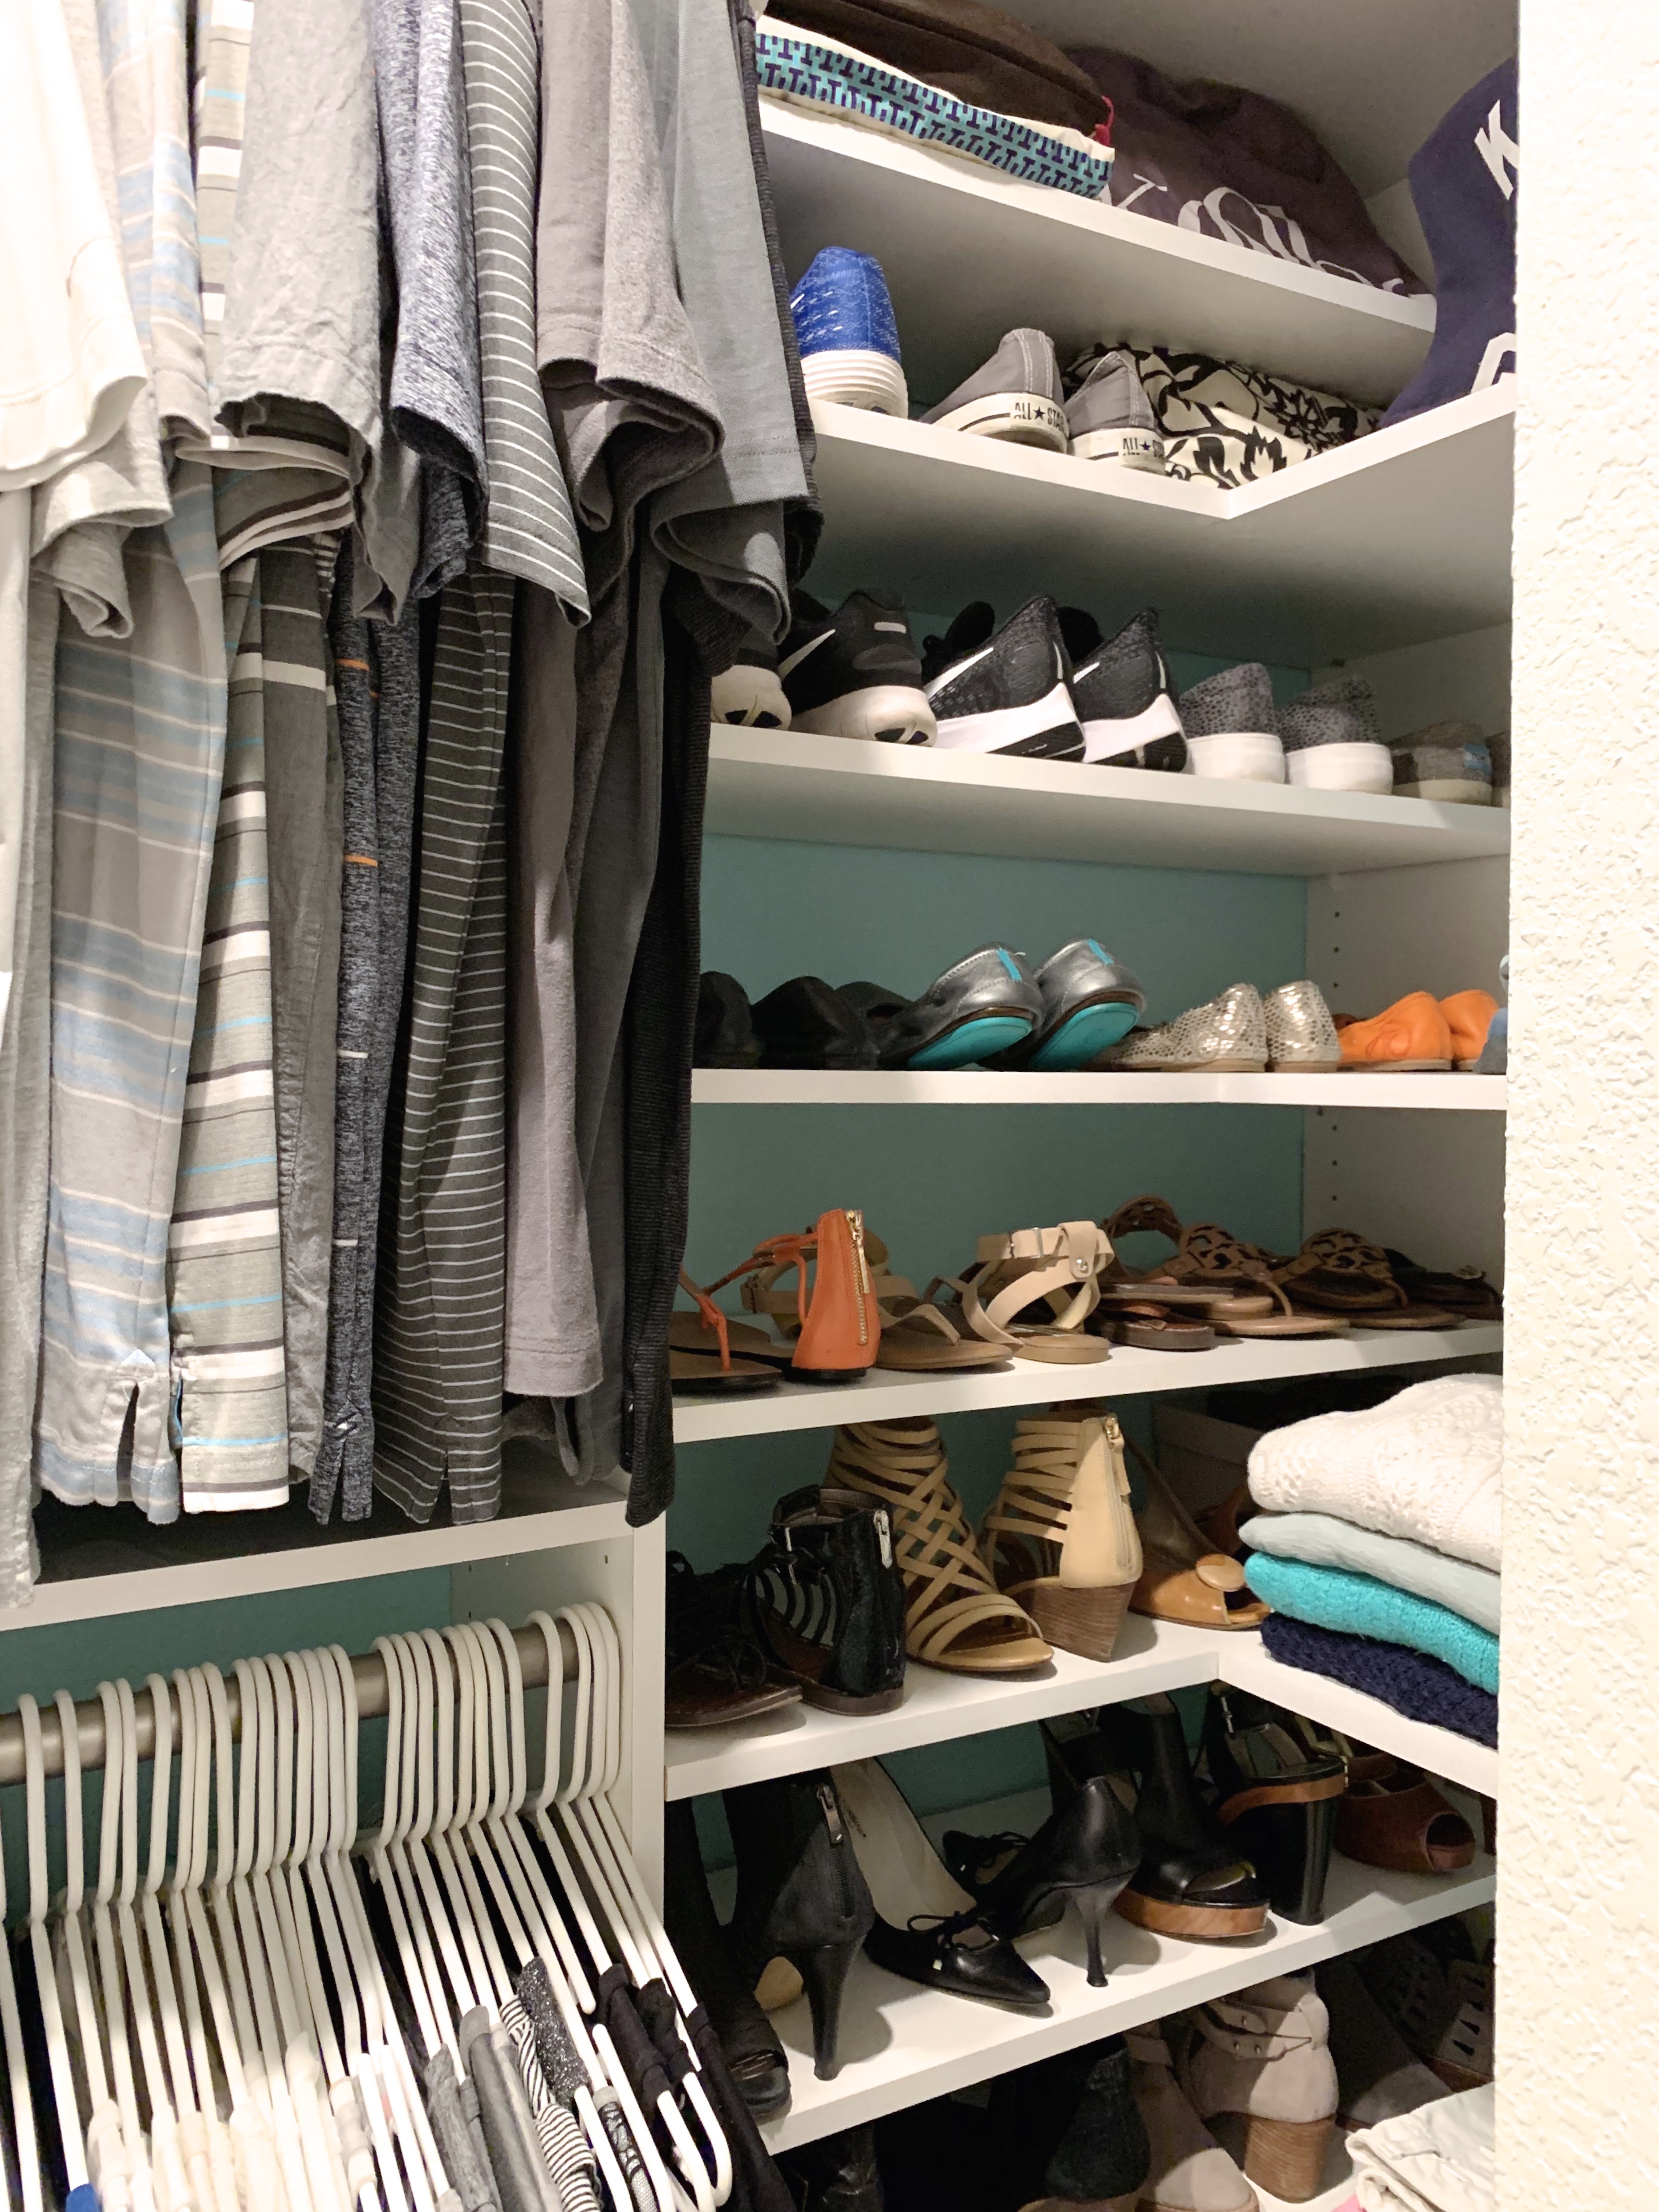 https://simplyorganized.me/wp-content/uploads/2019/02/shoes-organized-in-closet.jpg